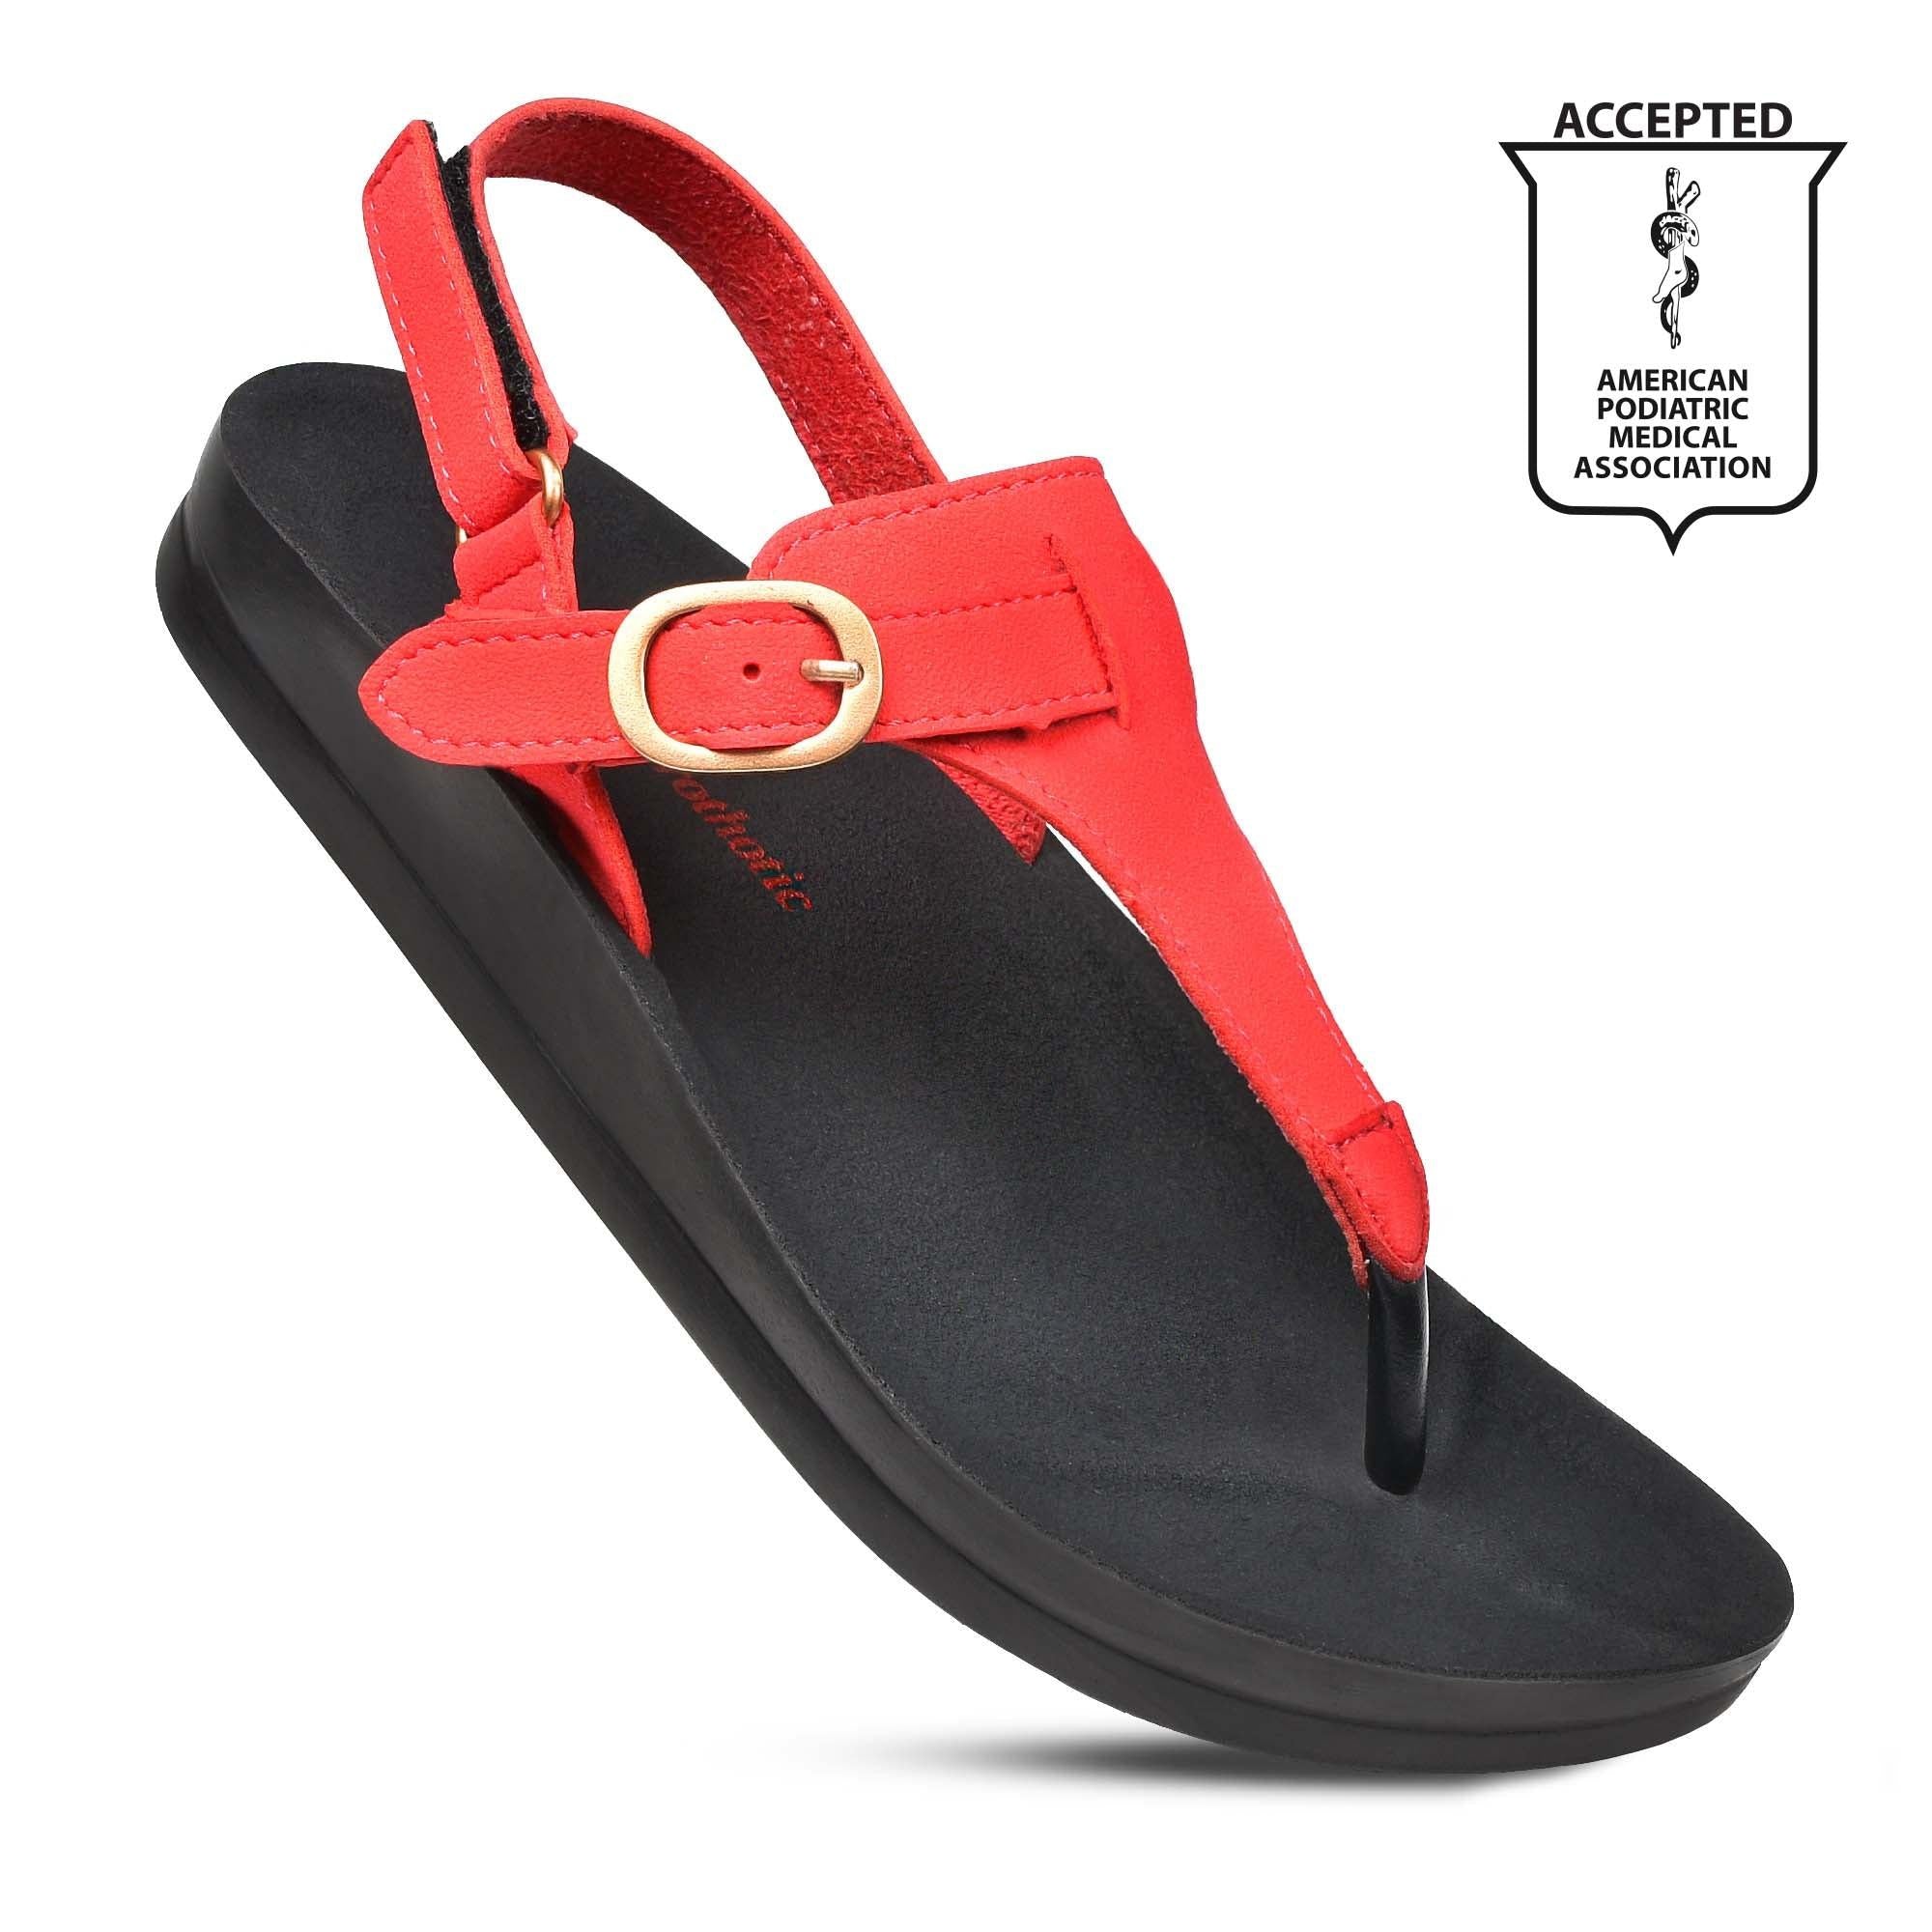 Buy Aerothotic Pakistan Women Pink/Black Flip Flops Slippers PK1